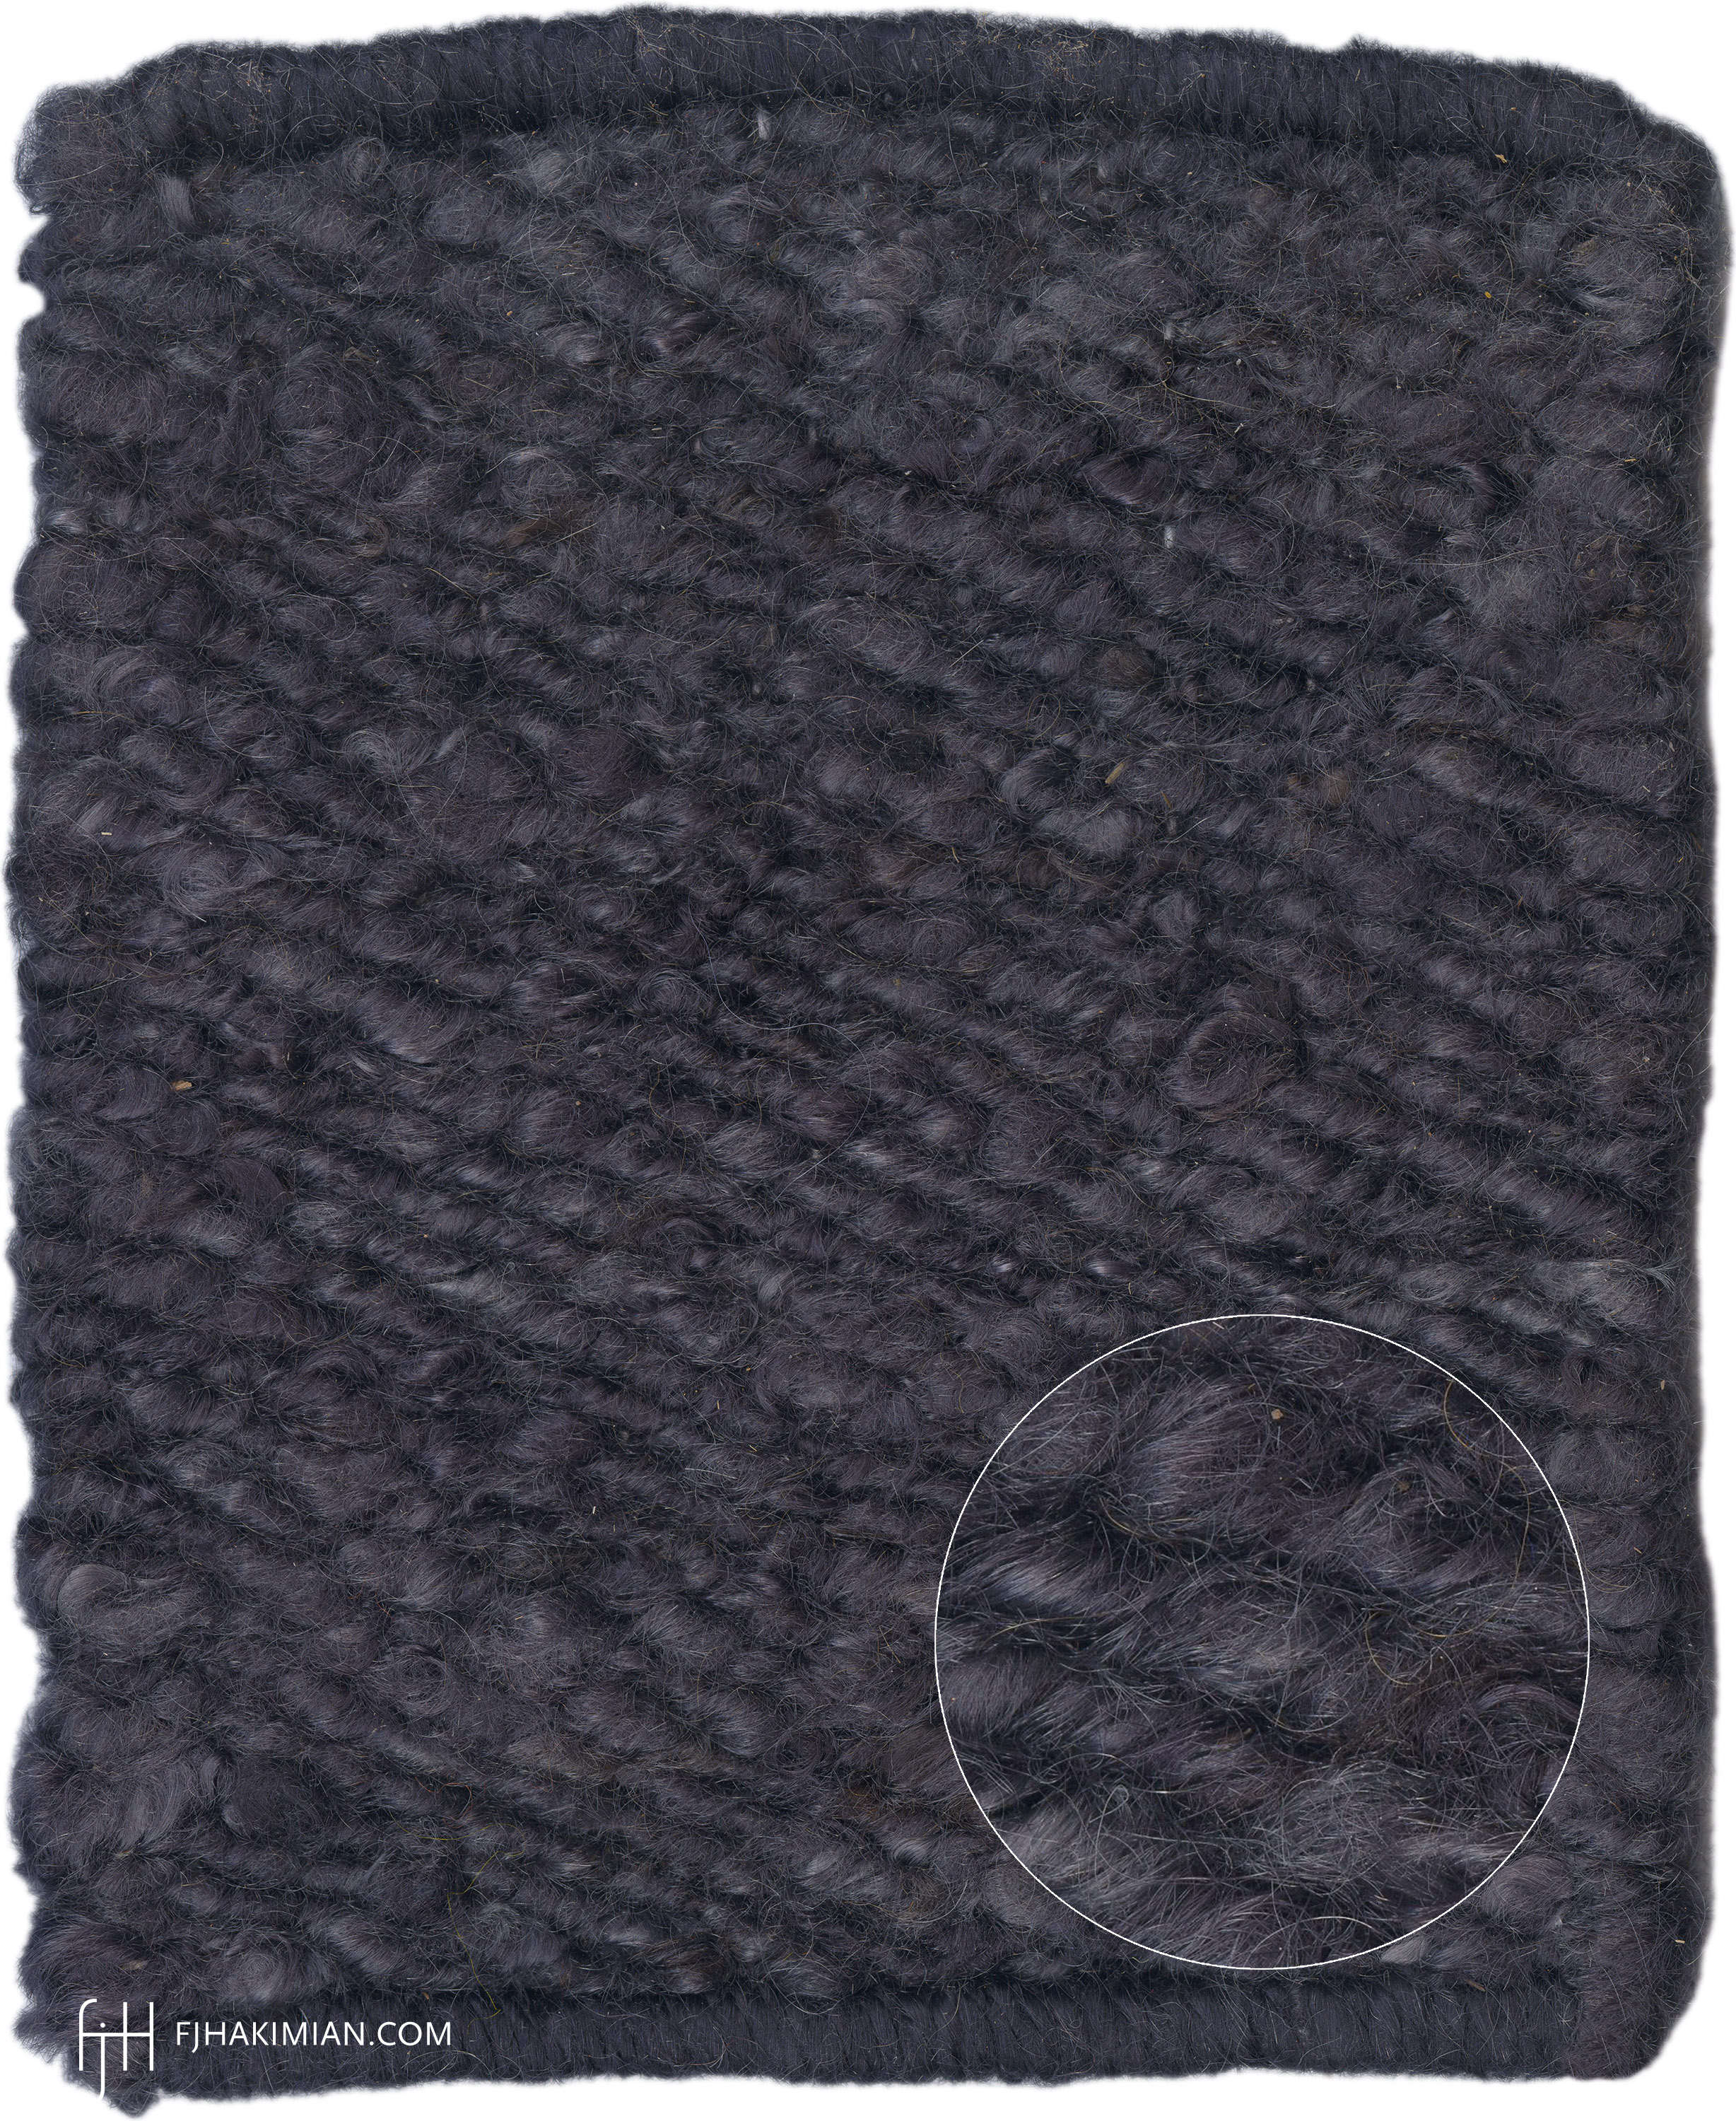 77795 | KL Midnight Mohair Design | Custom Mohair Carpet | FJ Hakimian | Carpet Gallery in NYC